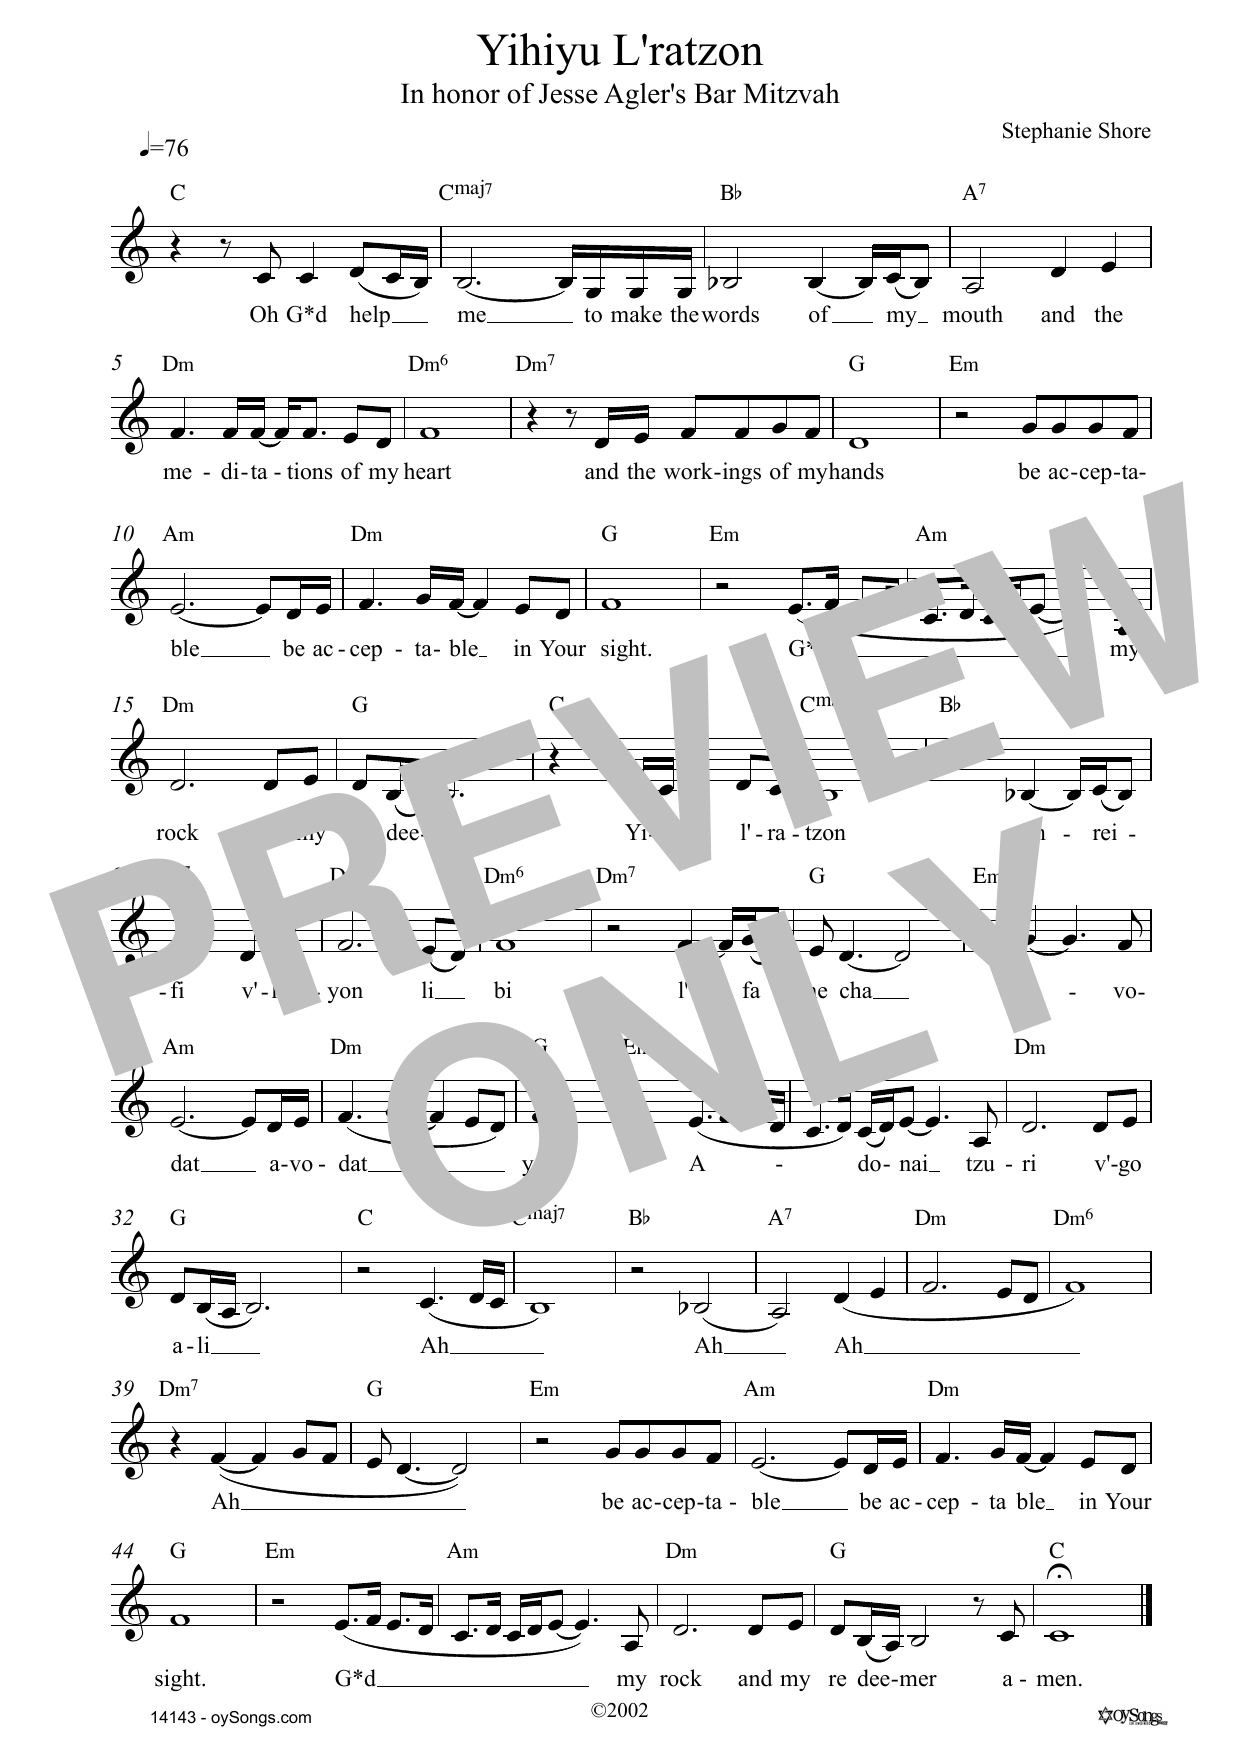 Stephanie Shore Yihiyu L'ratzon Sheet Music Notes & Chords for Lead Sheet / Fake Book - Download or Print PDF